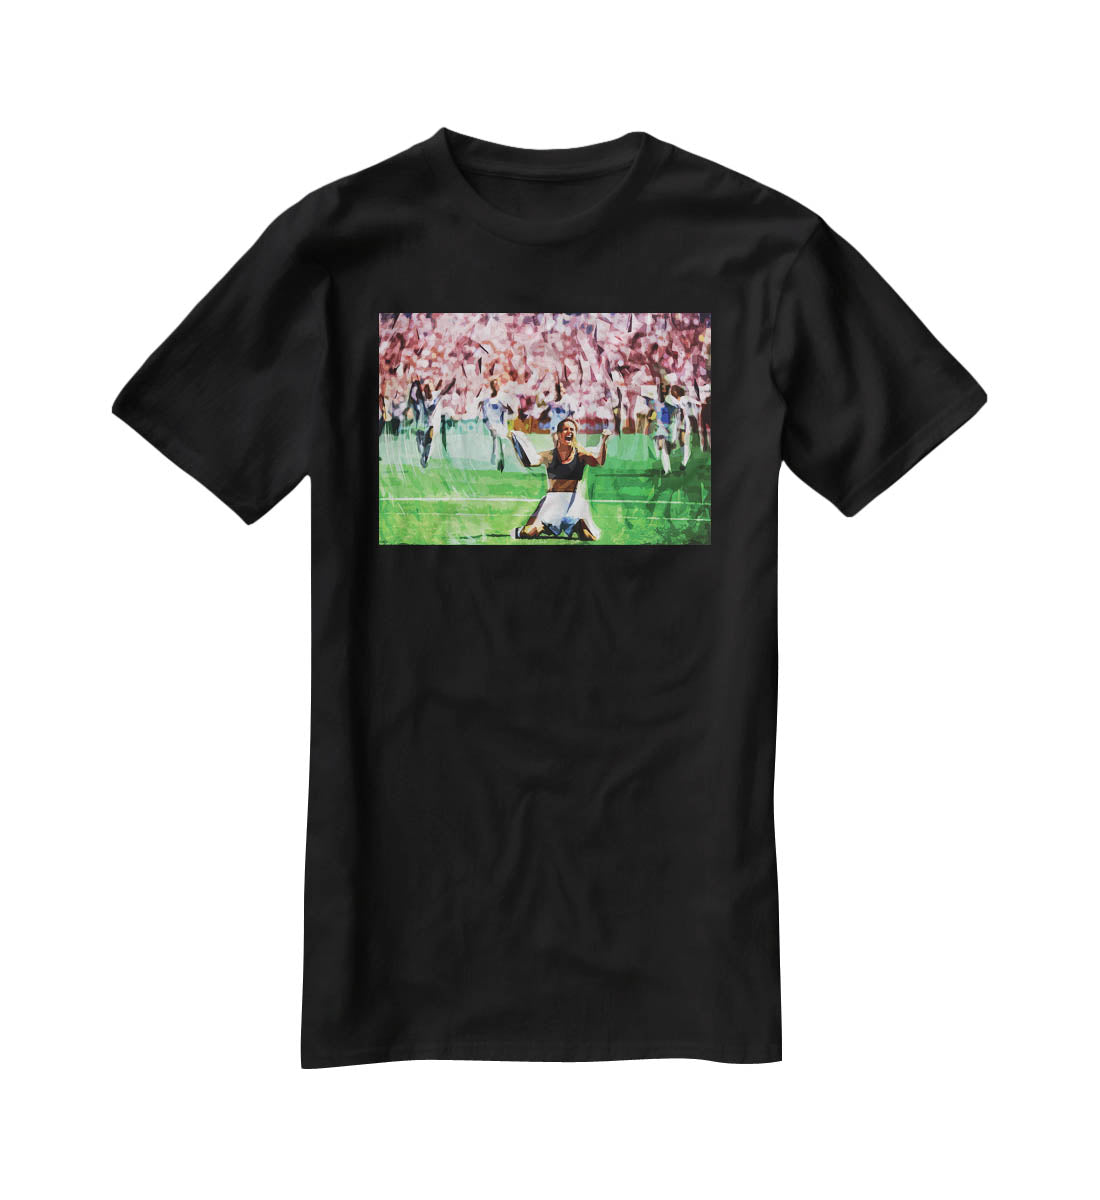 Brandi Chastain Celebrates USA Soccer 1999 T-Shirt